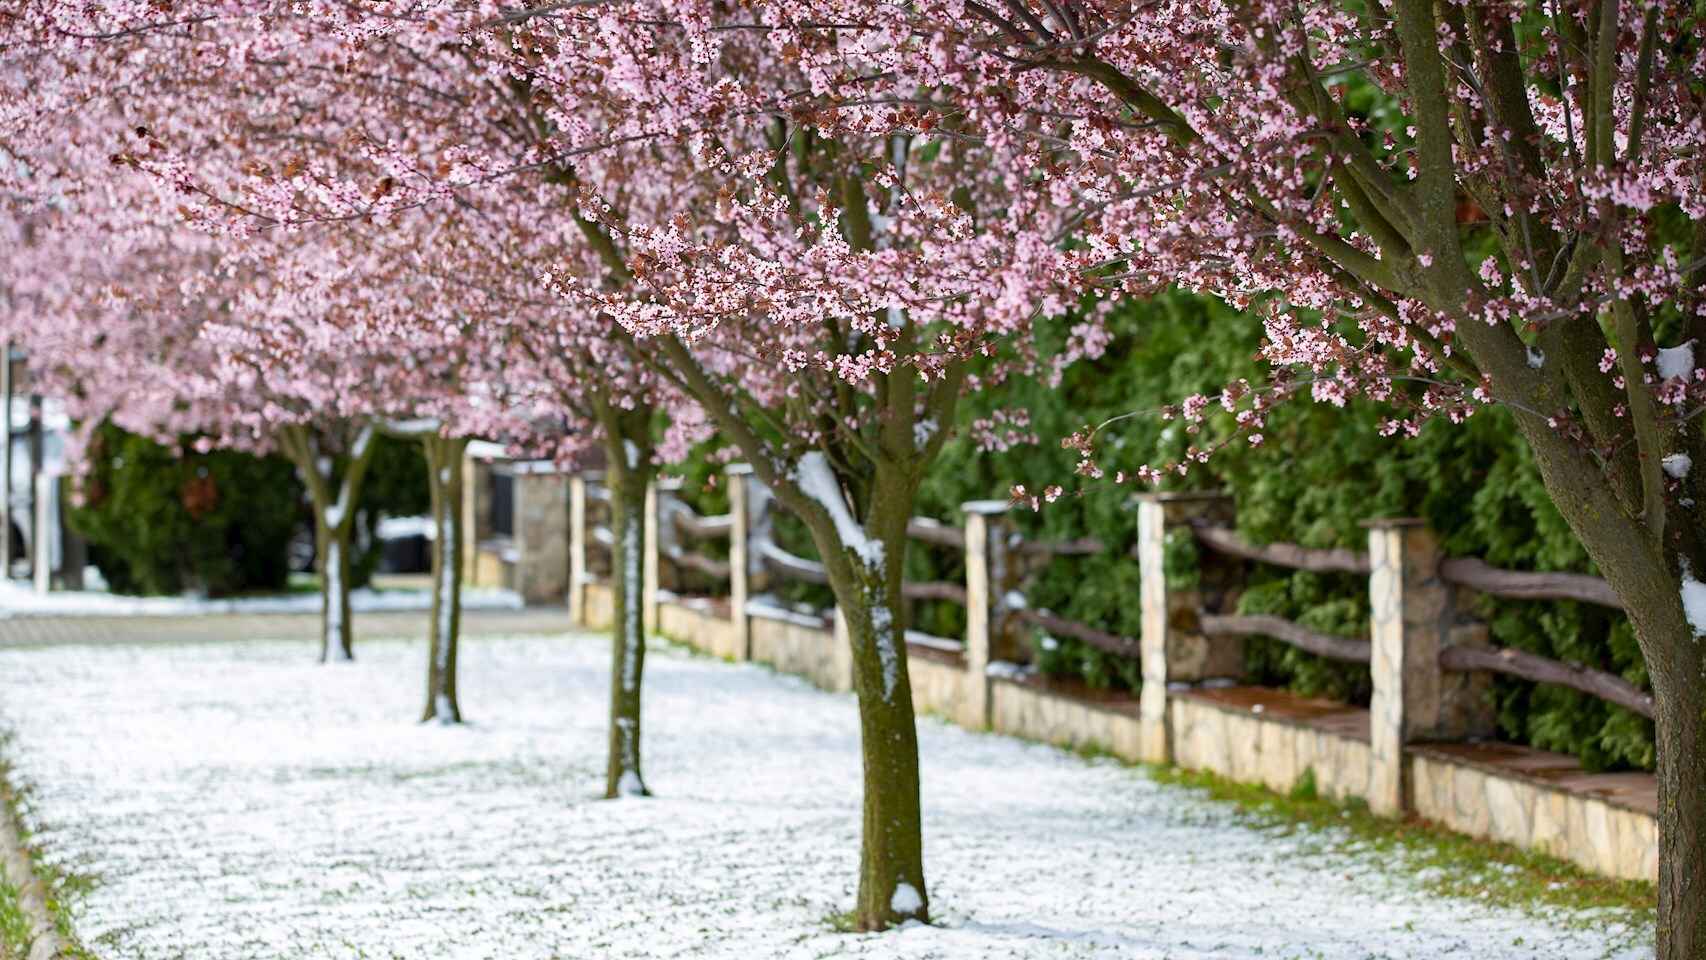 Nieve en primavera. EFE/EPA